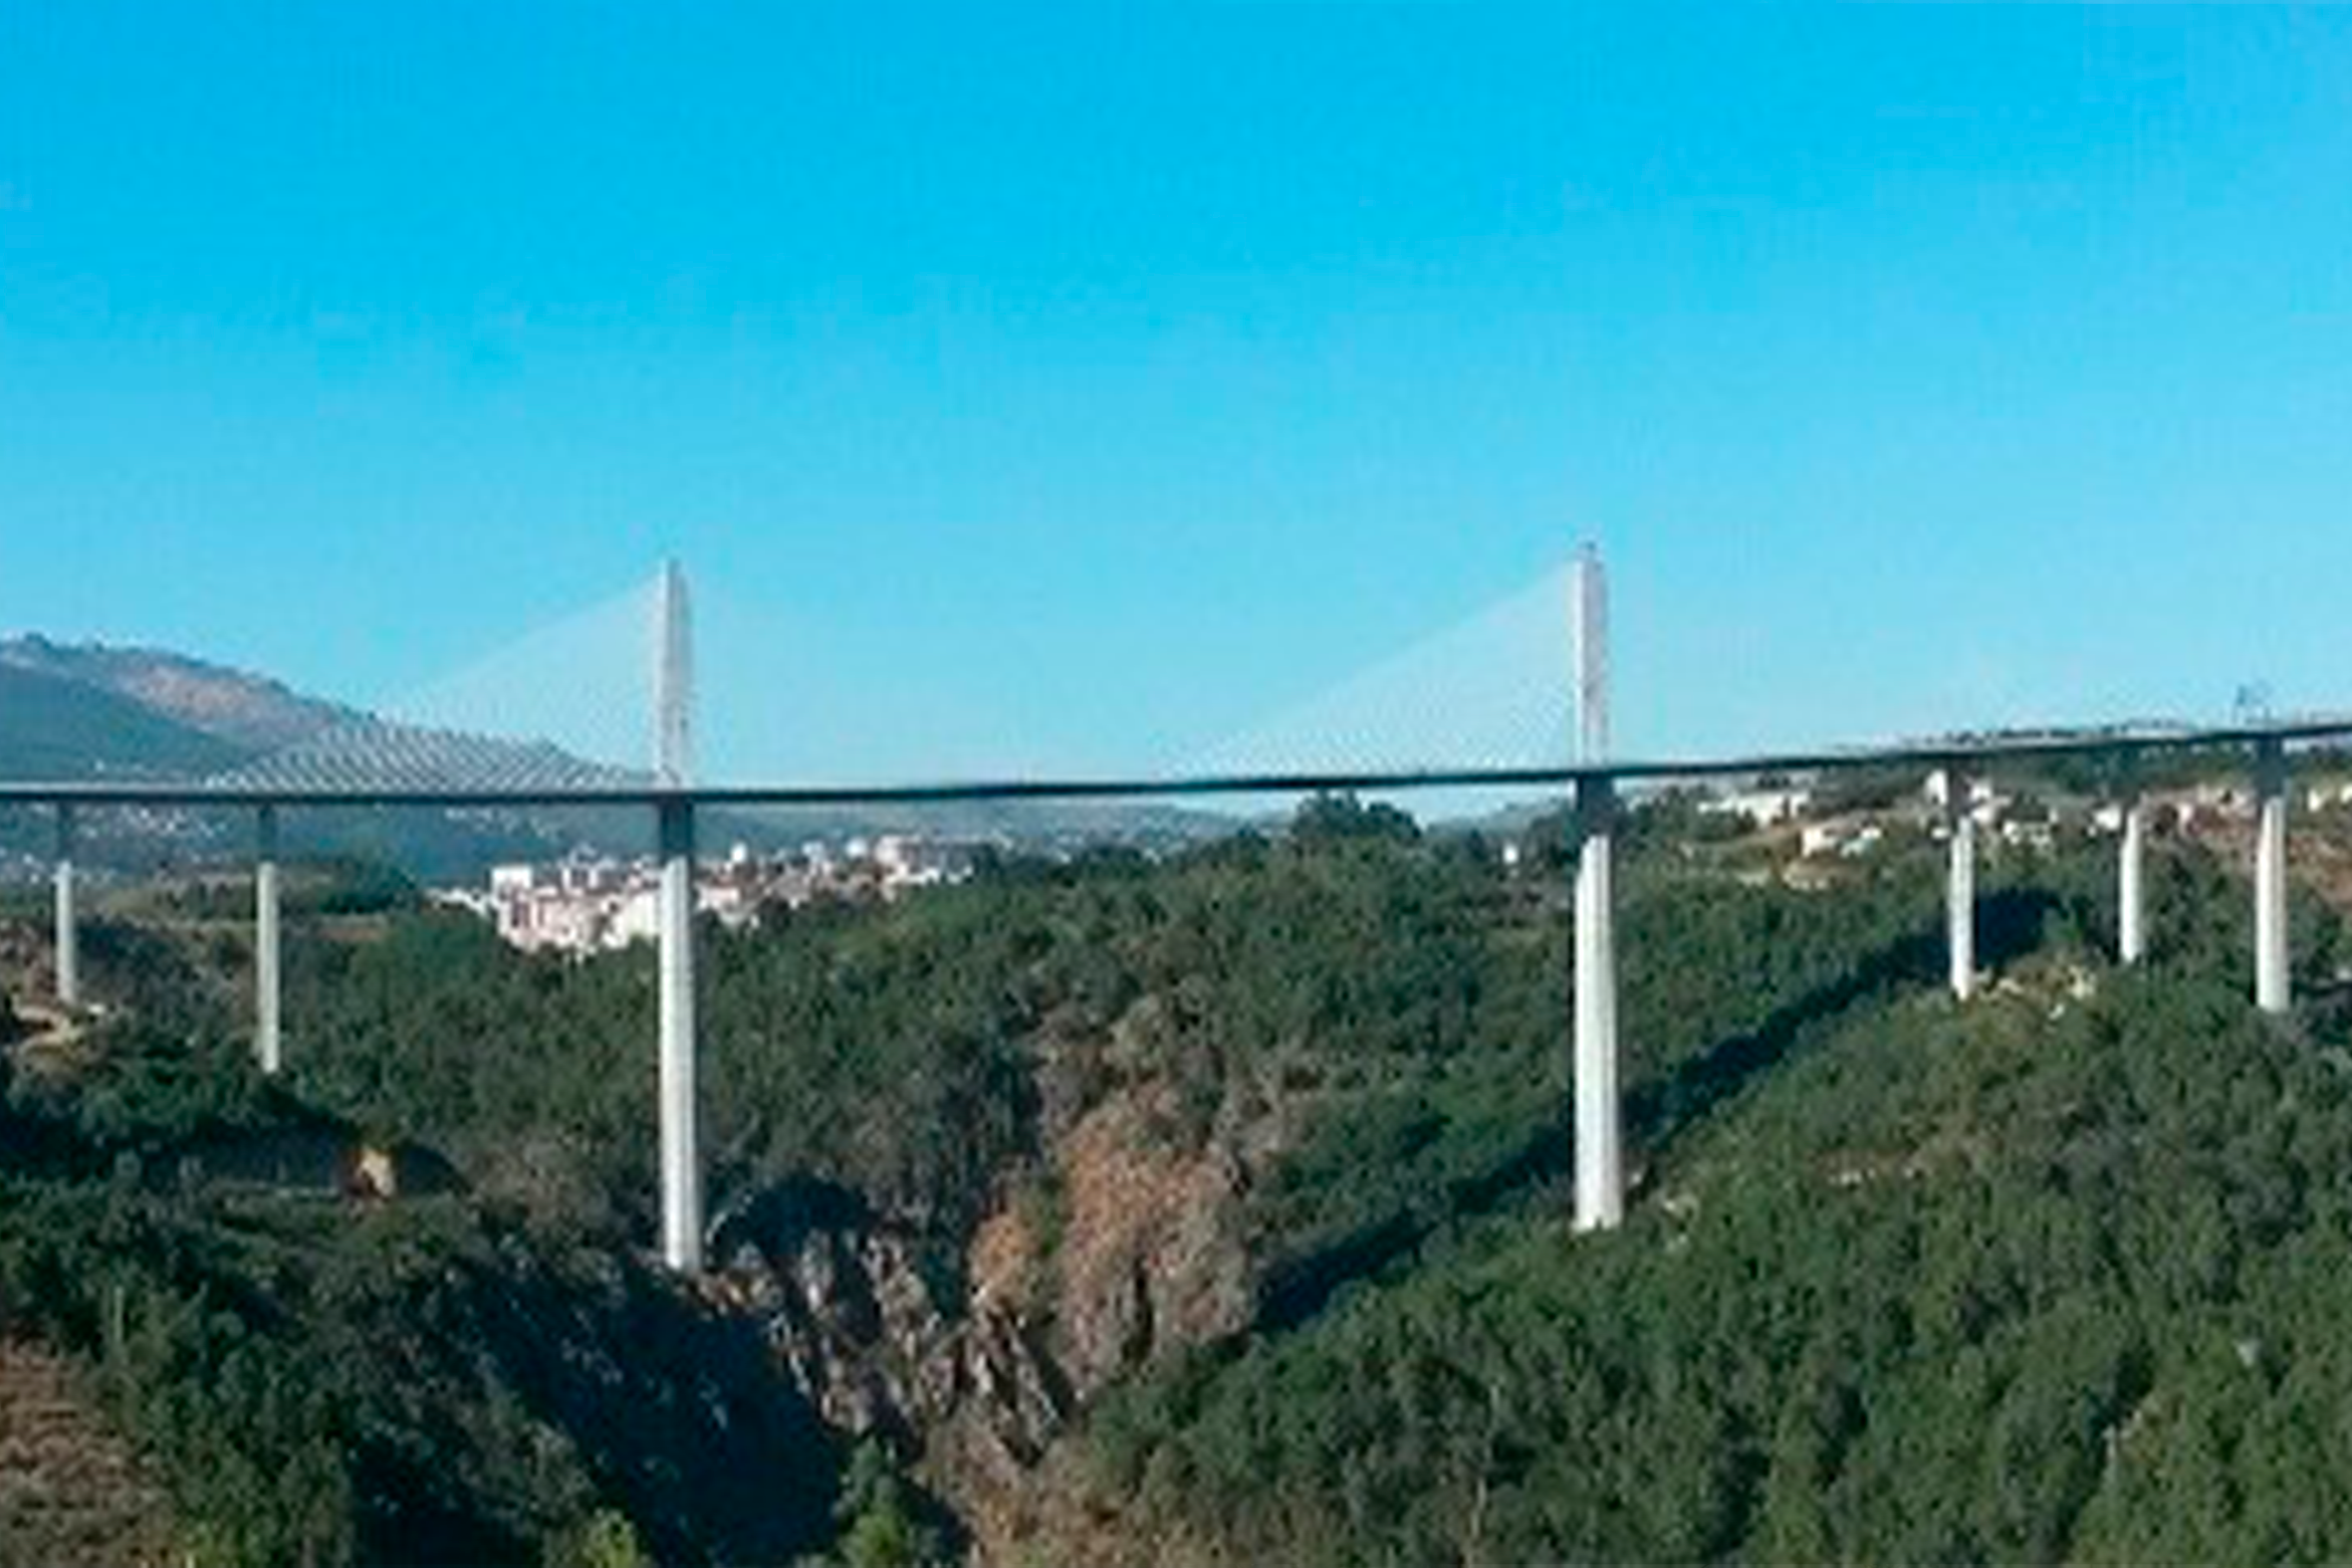 Bridges and structures